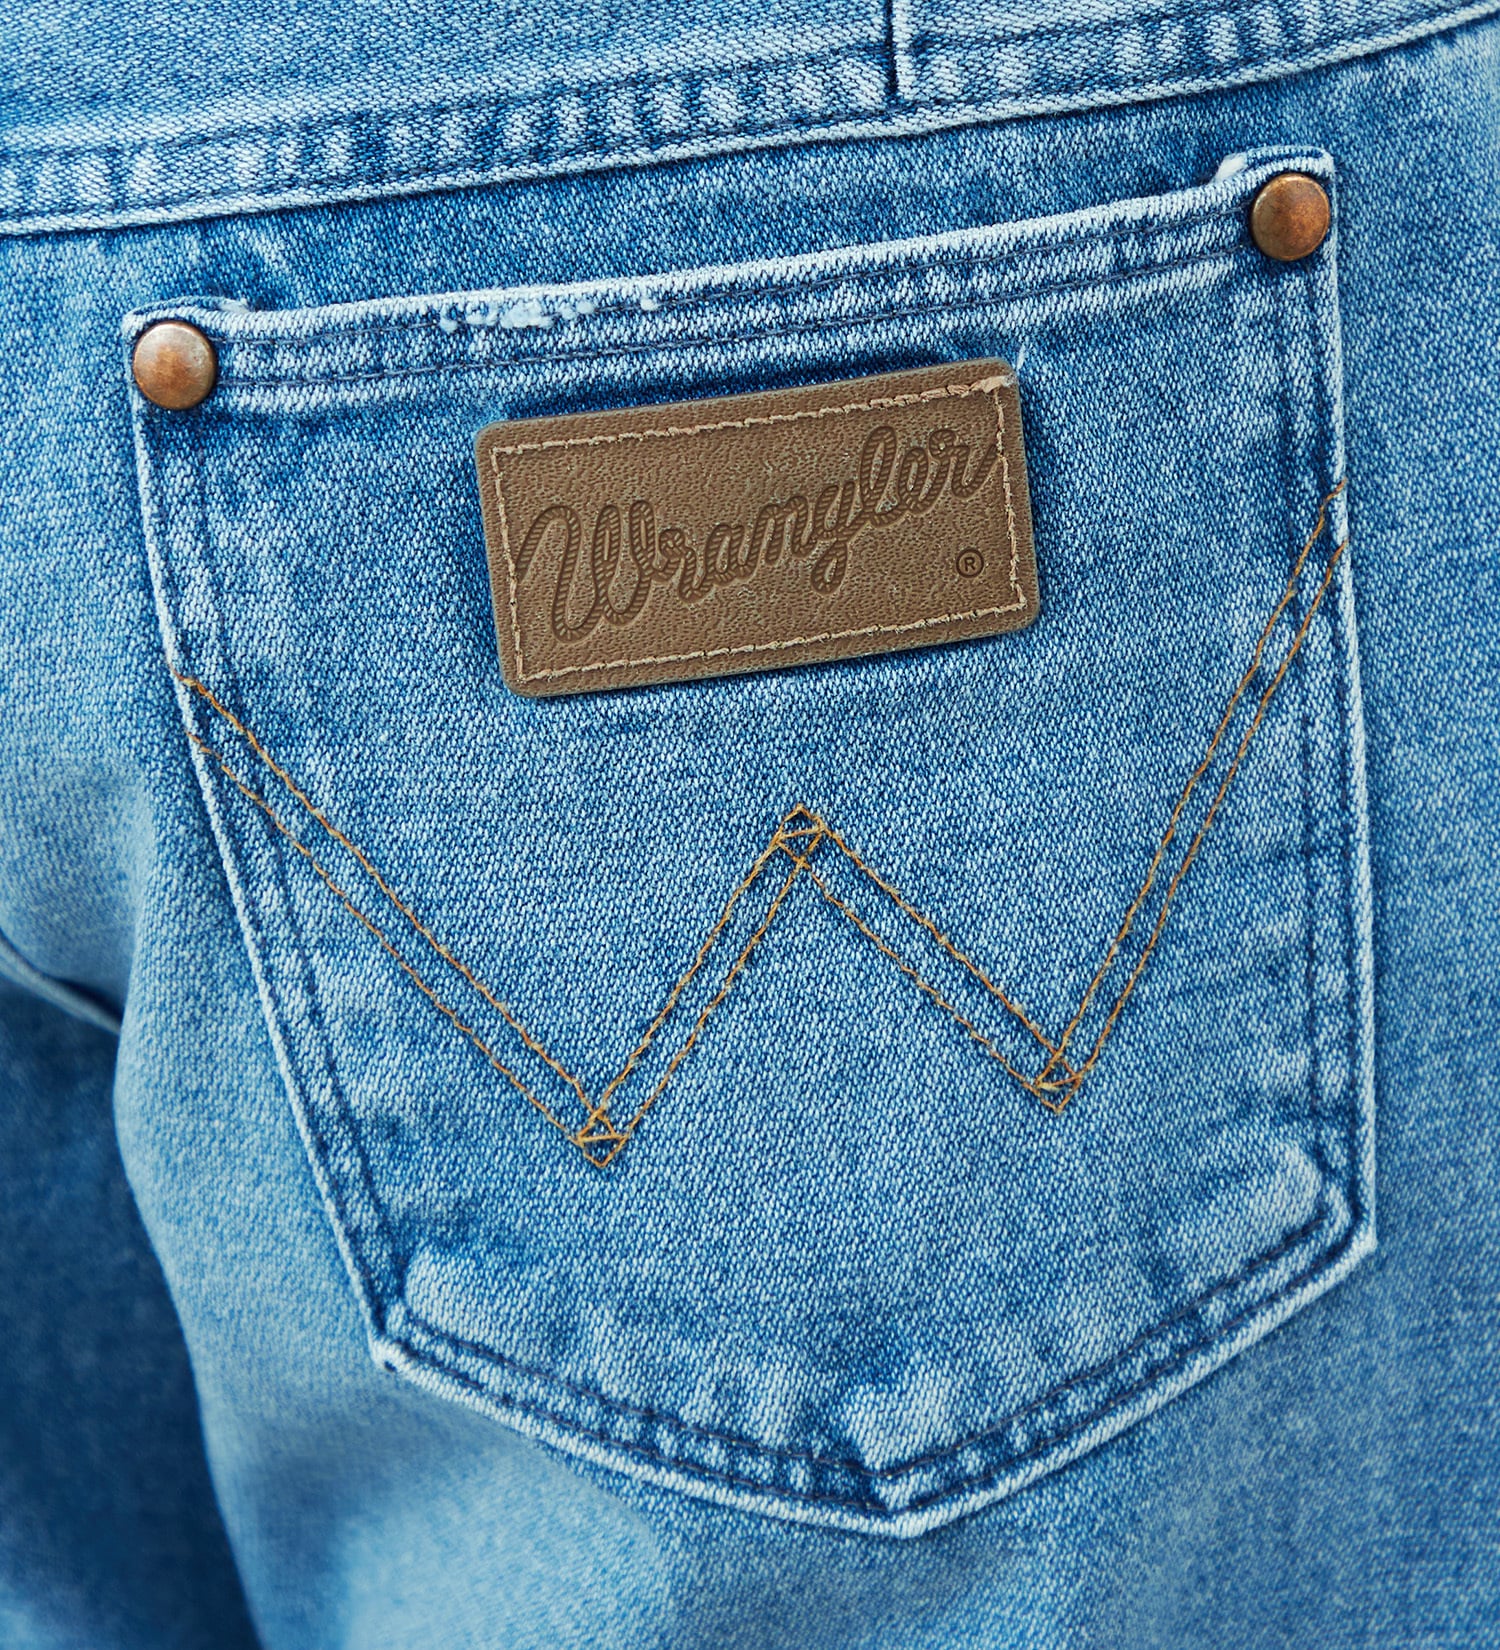 Wrangler(ラングラー)のビッグベルボトム|パンツ/デニムパンツ/レディース|淡色ブルー